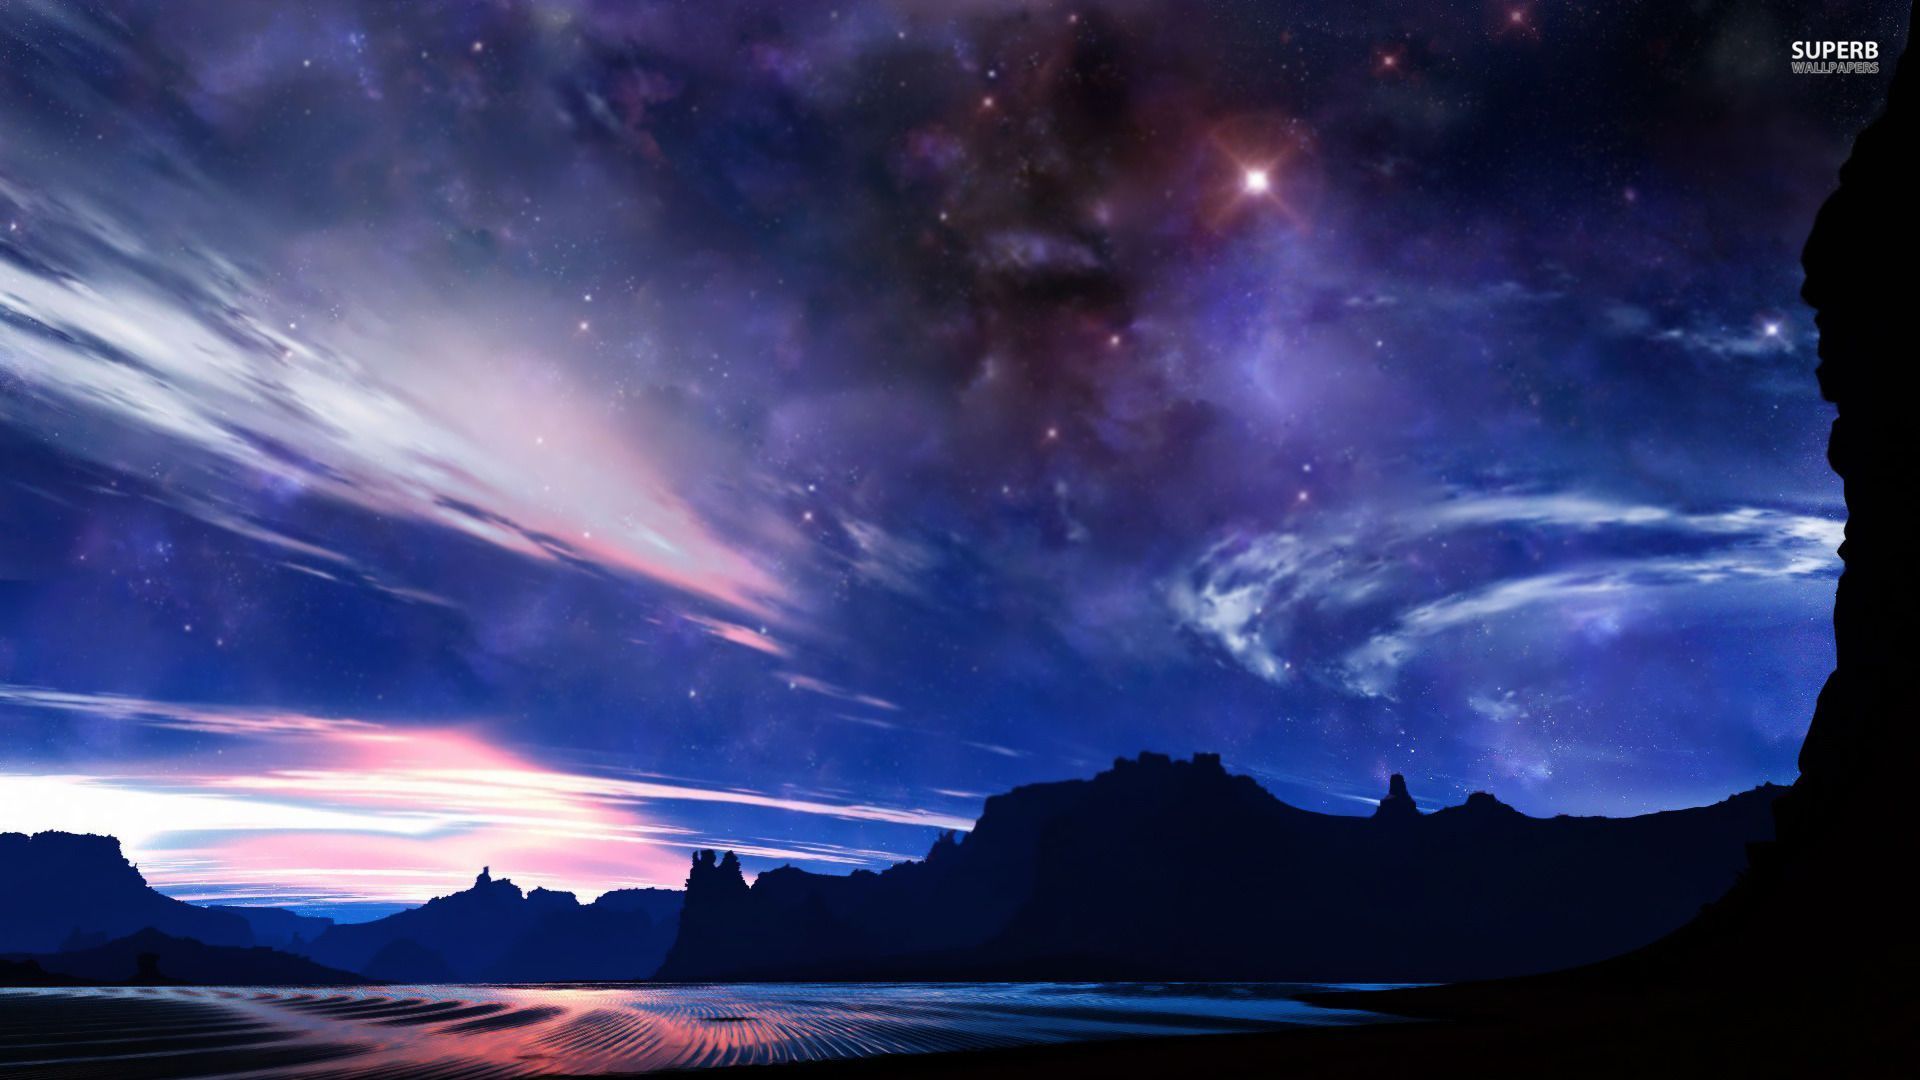 Fantastic night sky wallpaper - Digital Art wallpapers - #20288